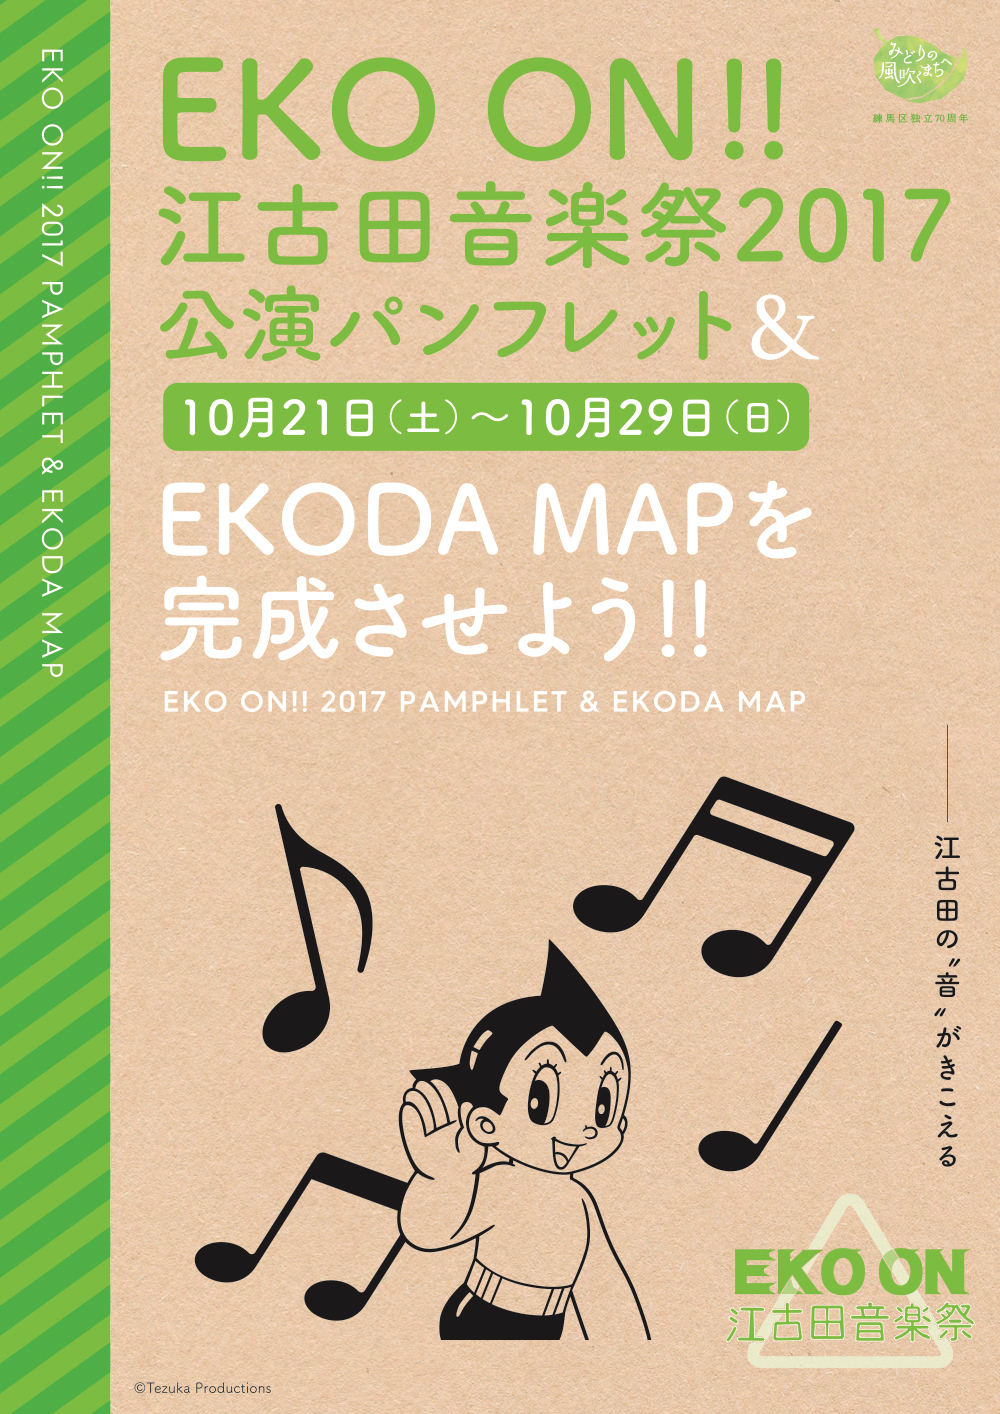 EKO ON江古田音楽祭2017の全体公演パンフレット①